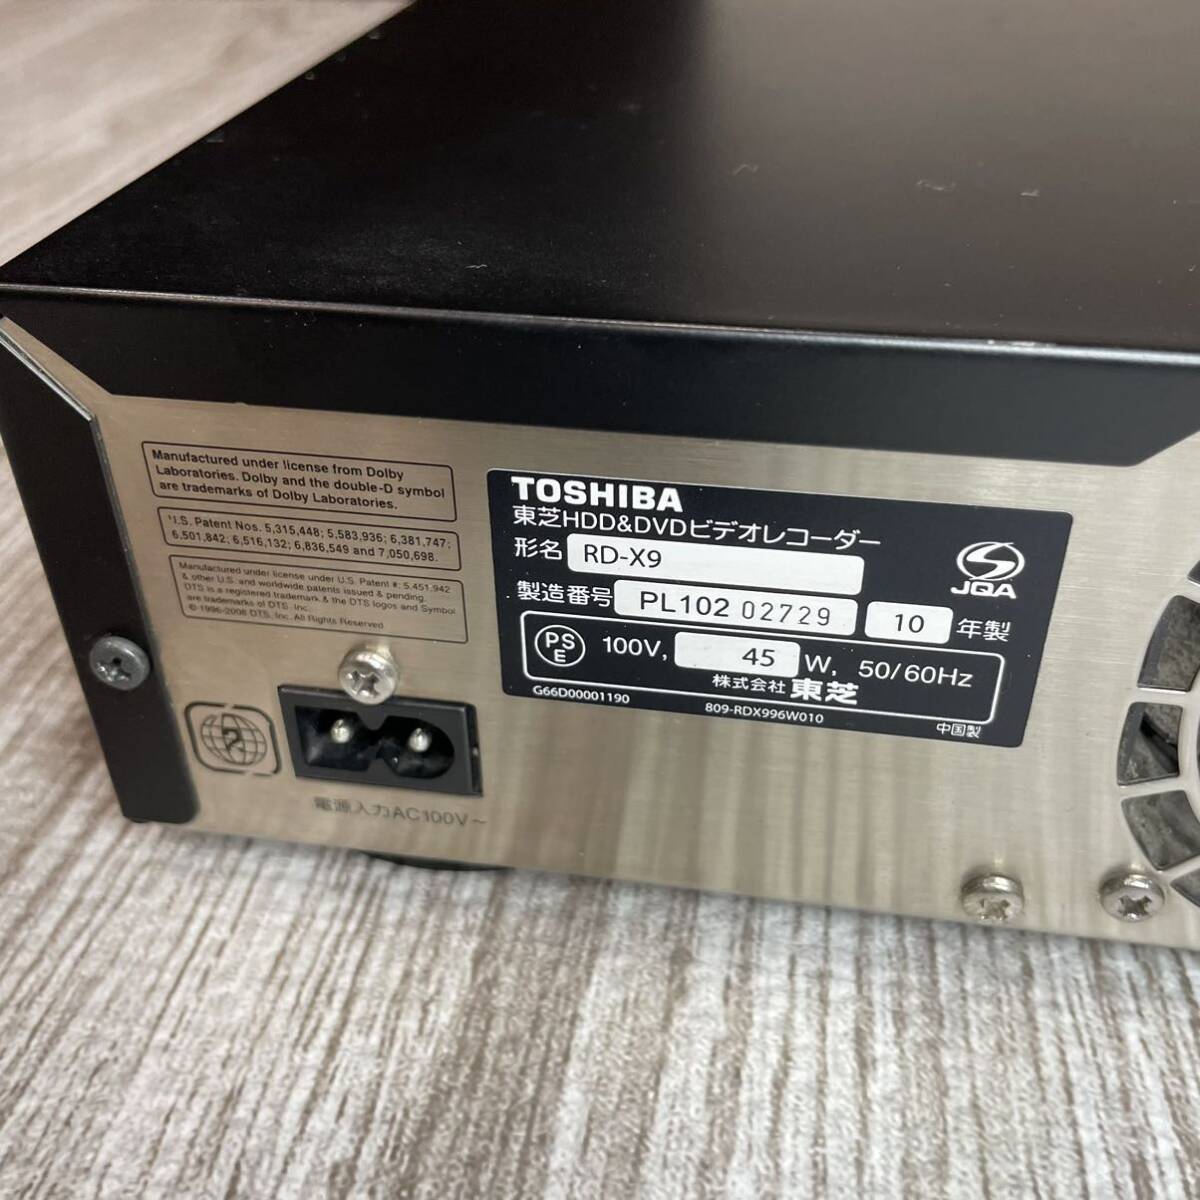 [ Junk ] TOSHIBA Toshiba HDD&DVD recorder VARDIA RD-X9